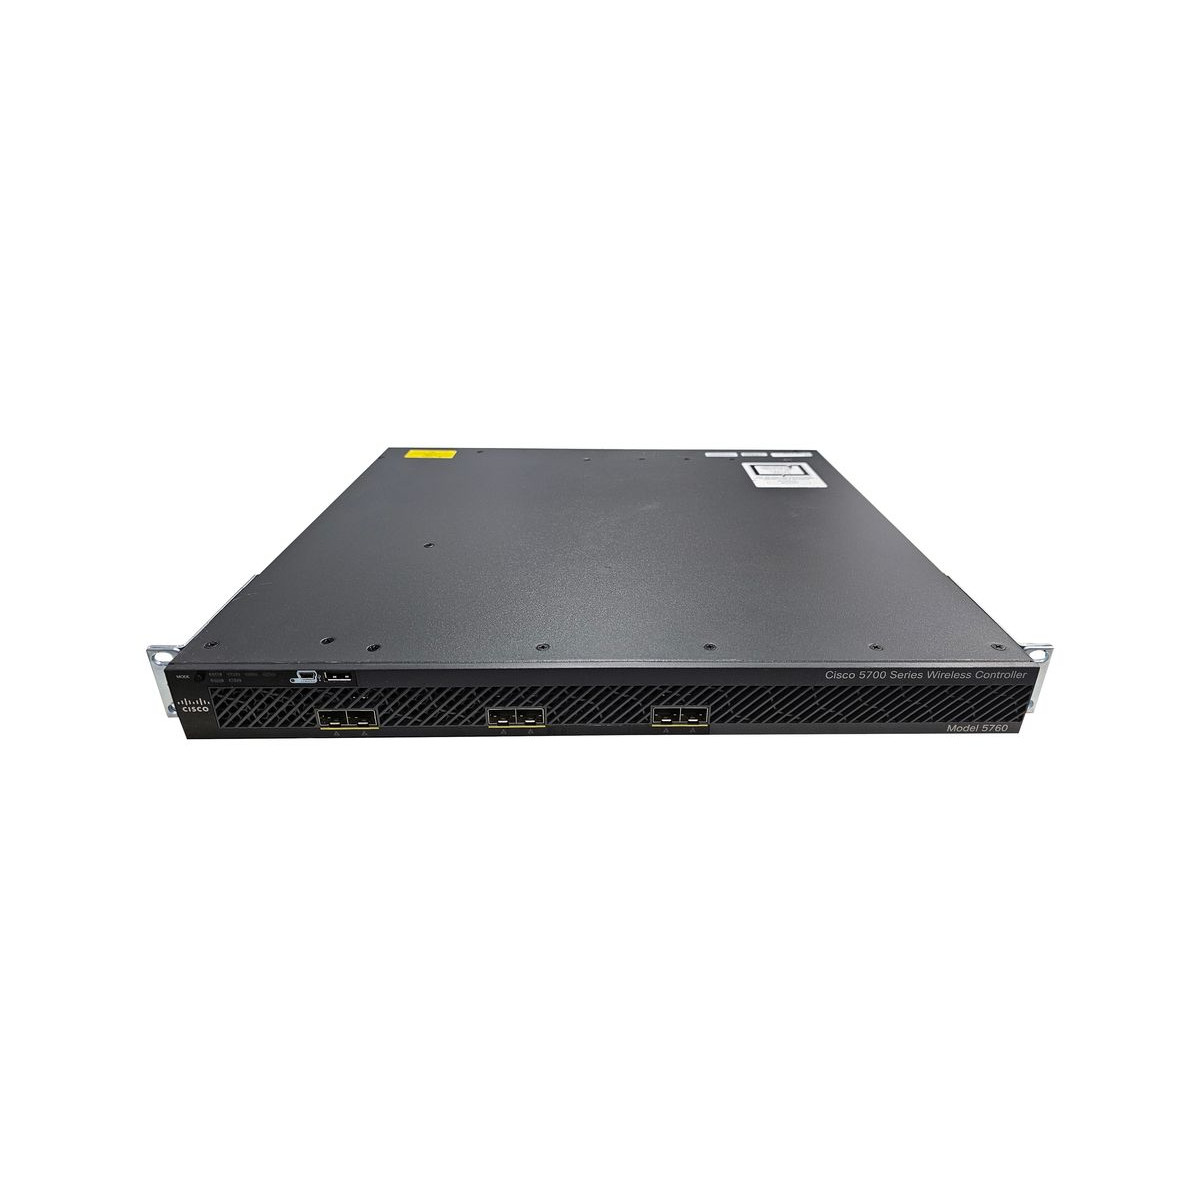 CISCO AIR-CT5760-25-K9 WLAN CONTROLLER 6x10GB SFP+ 1xUSB 2xPSU